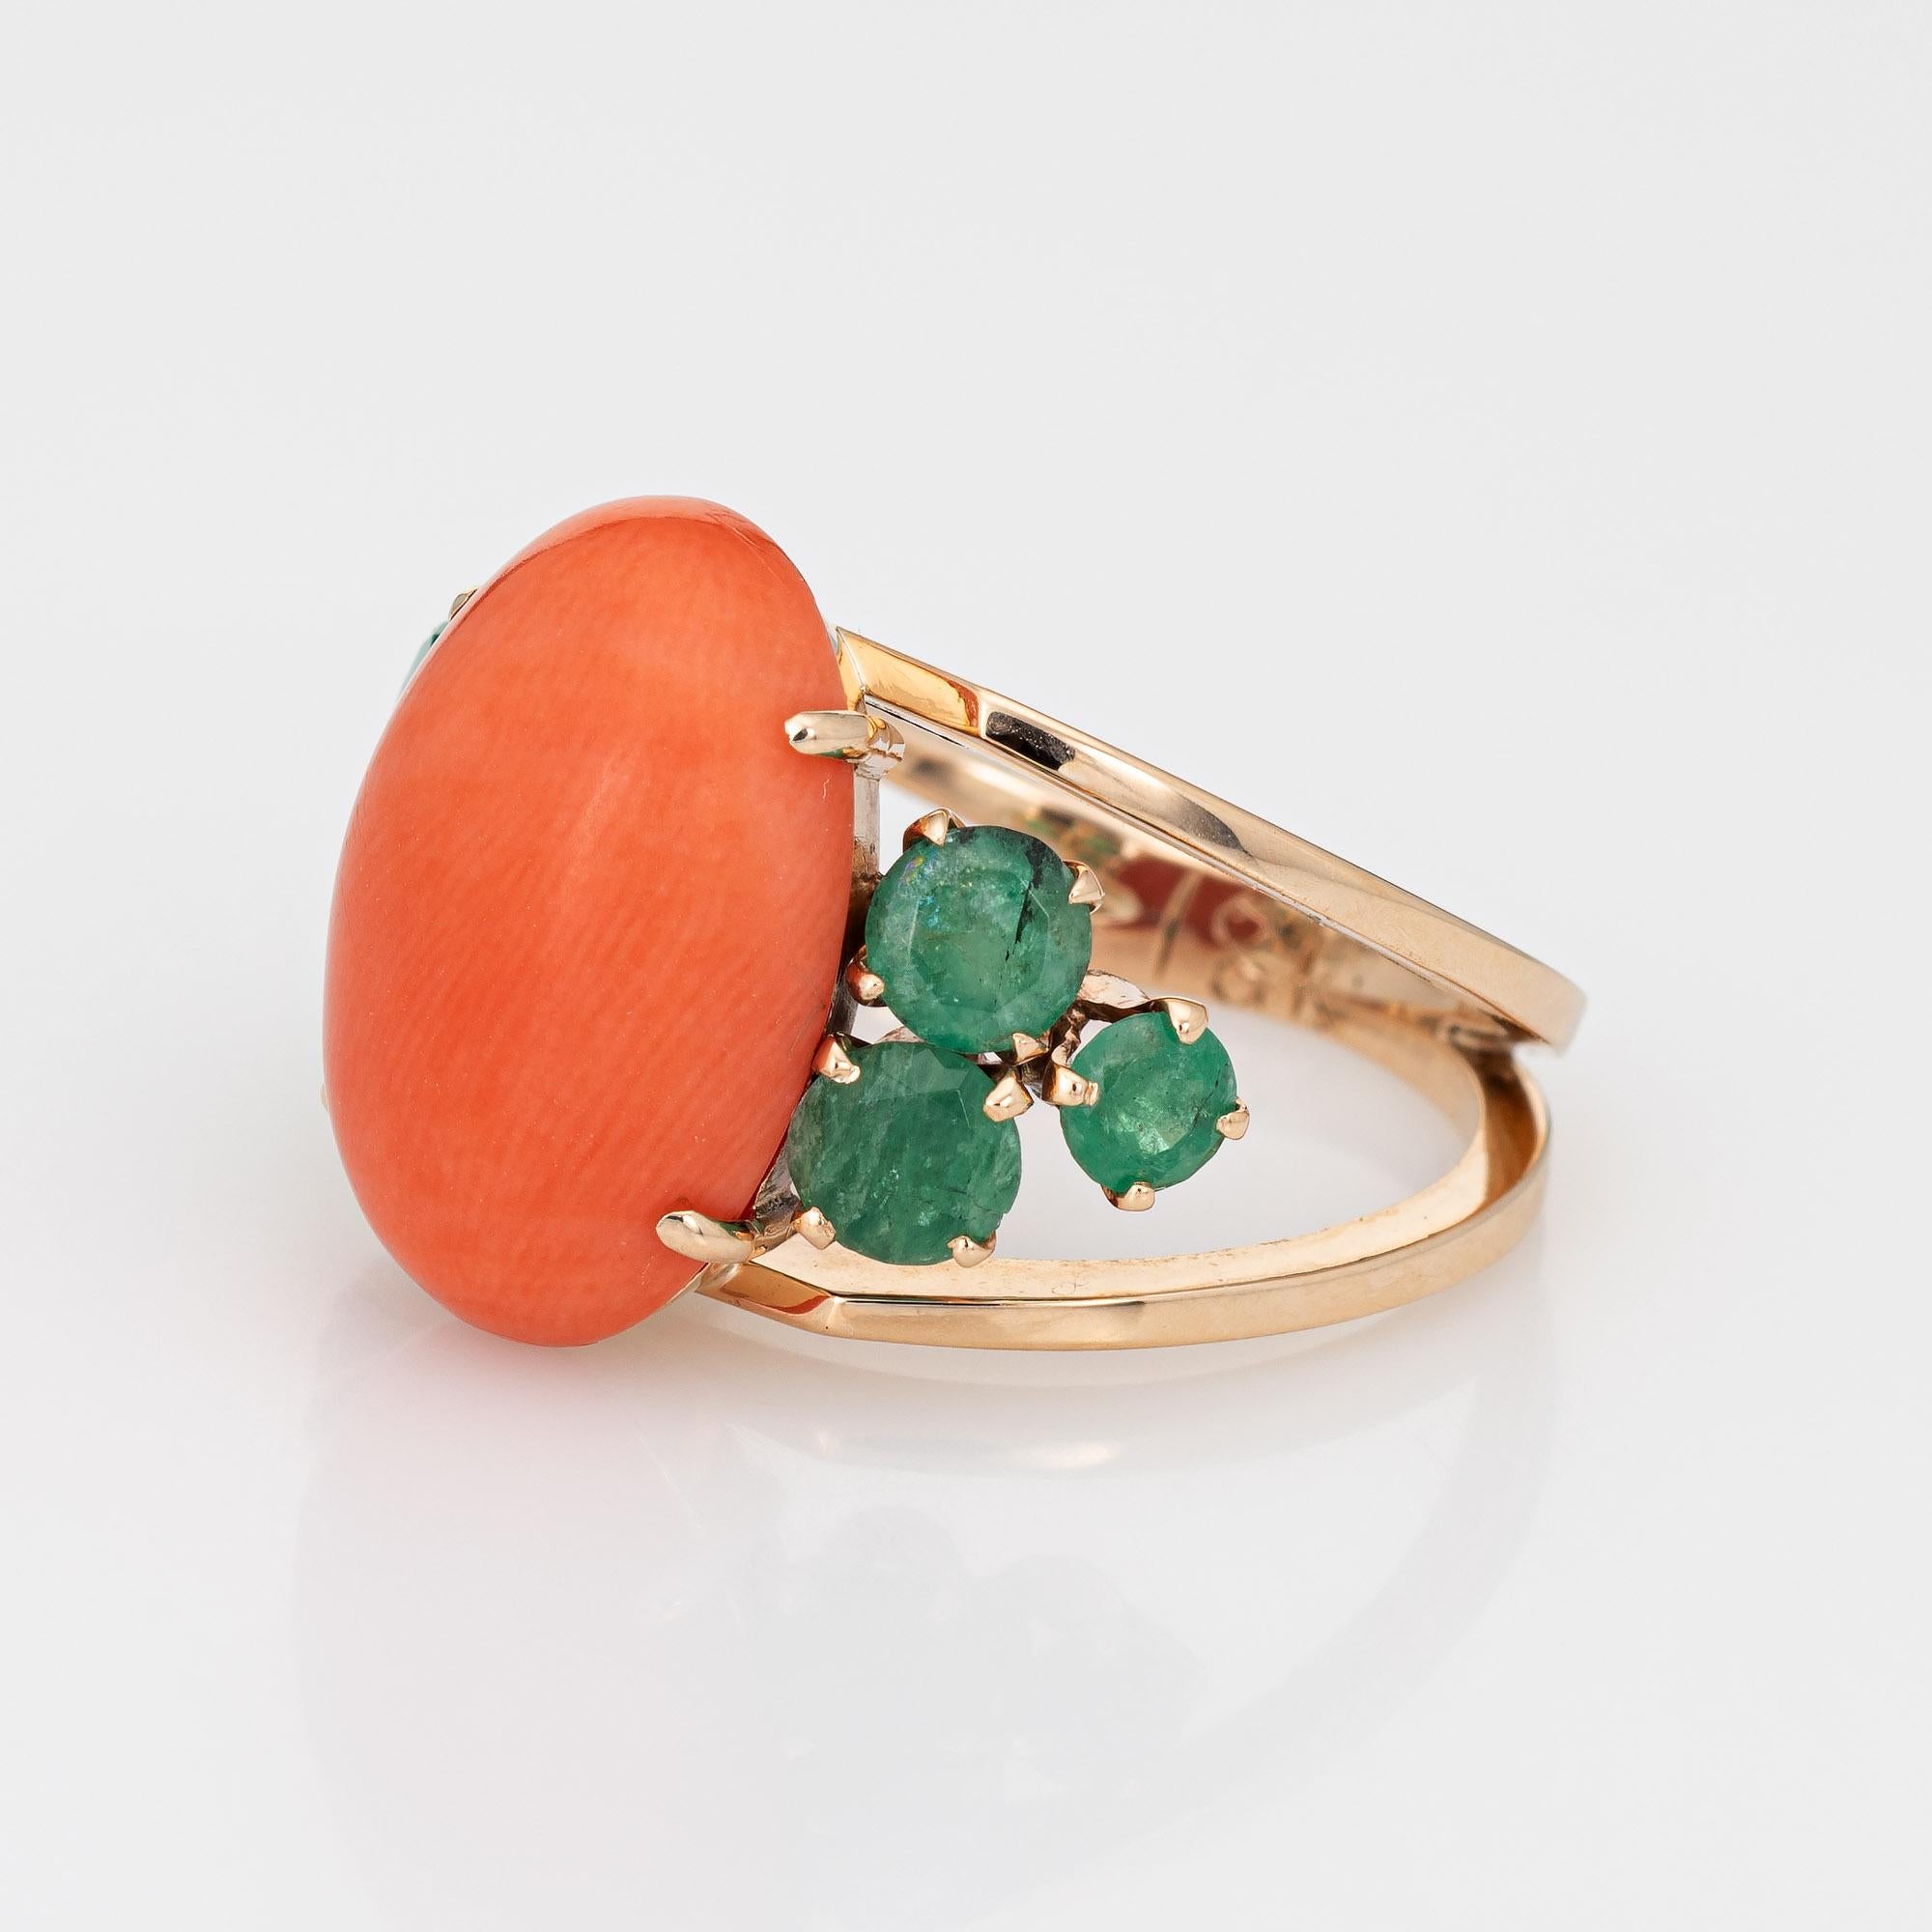 Cabochon Apricot Coral Emerald Ring Vintage 18 Karat Yellow Gold Estate Fine Jewelry